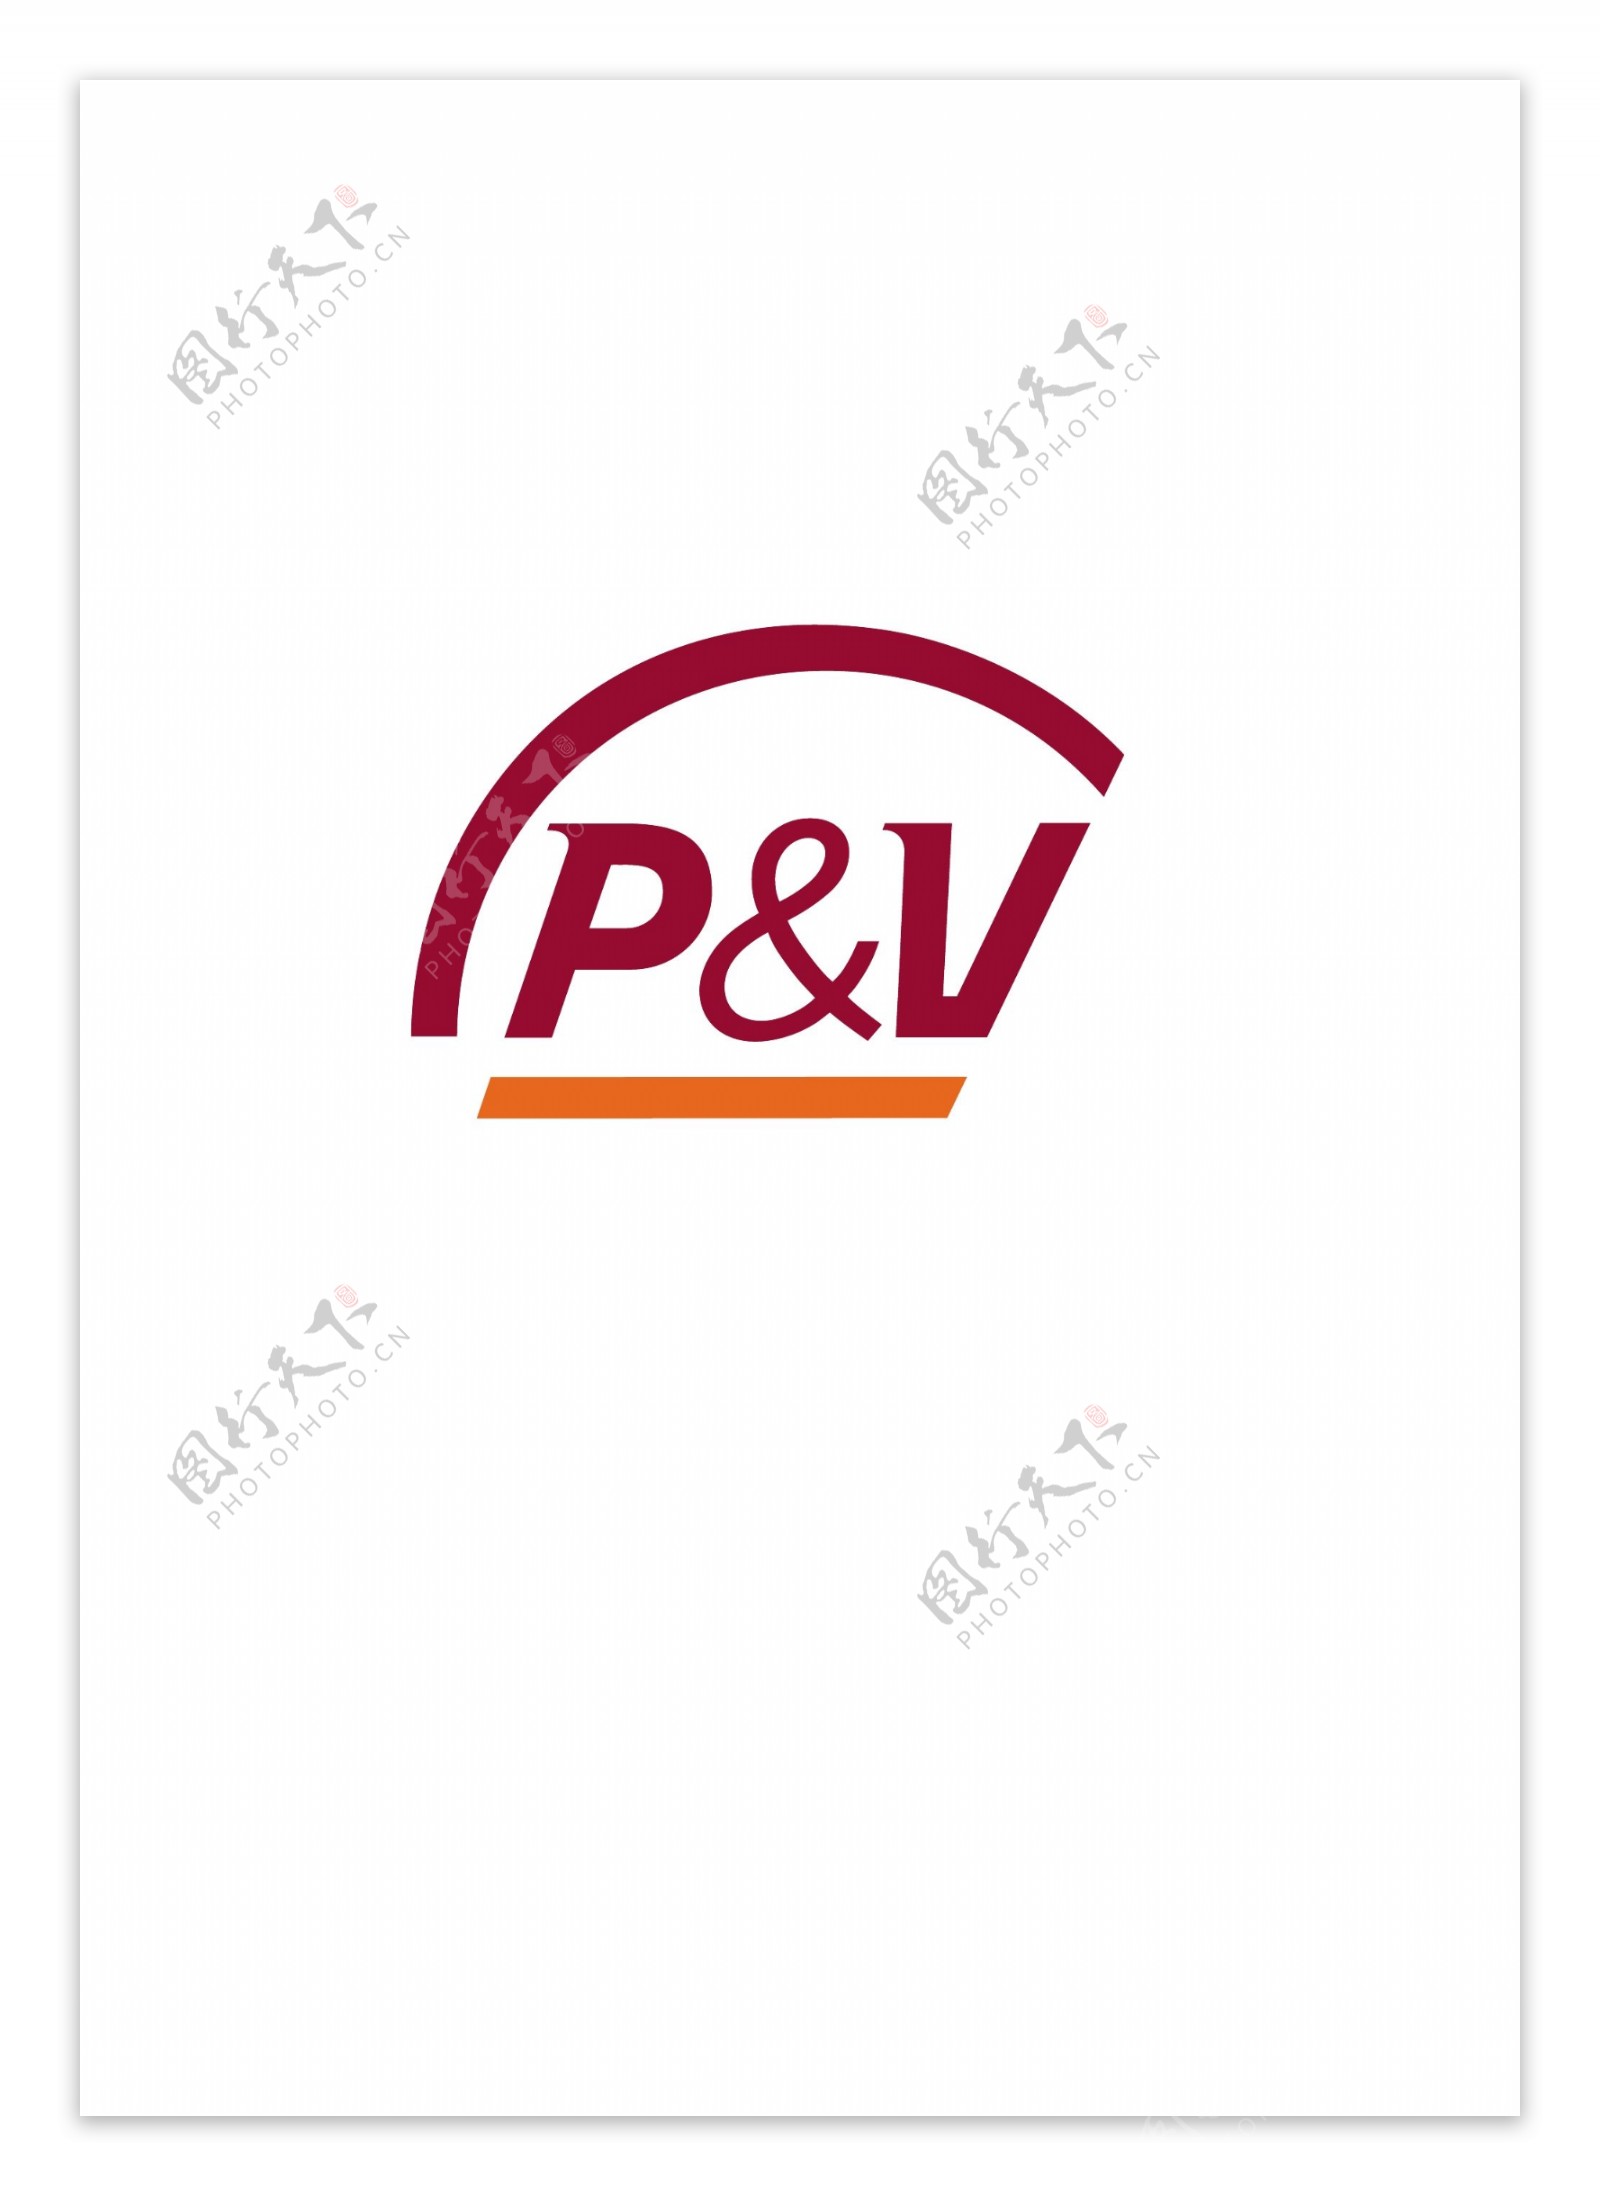 PandVlogo设计欣赏PandV人寿保险标志下载标志设计欣赏